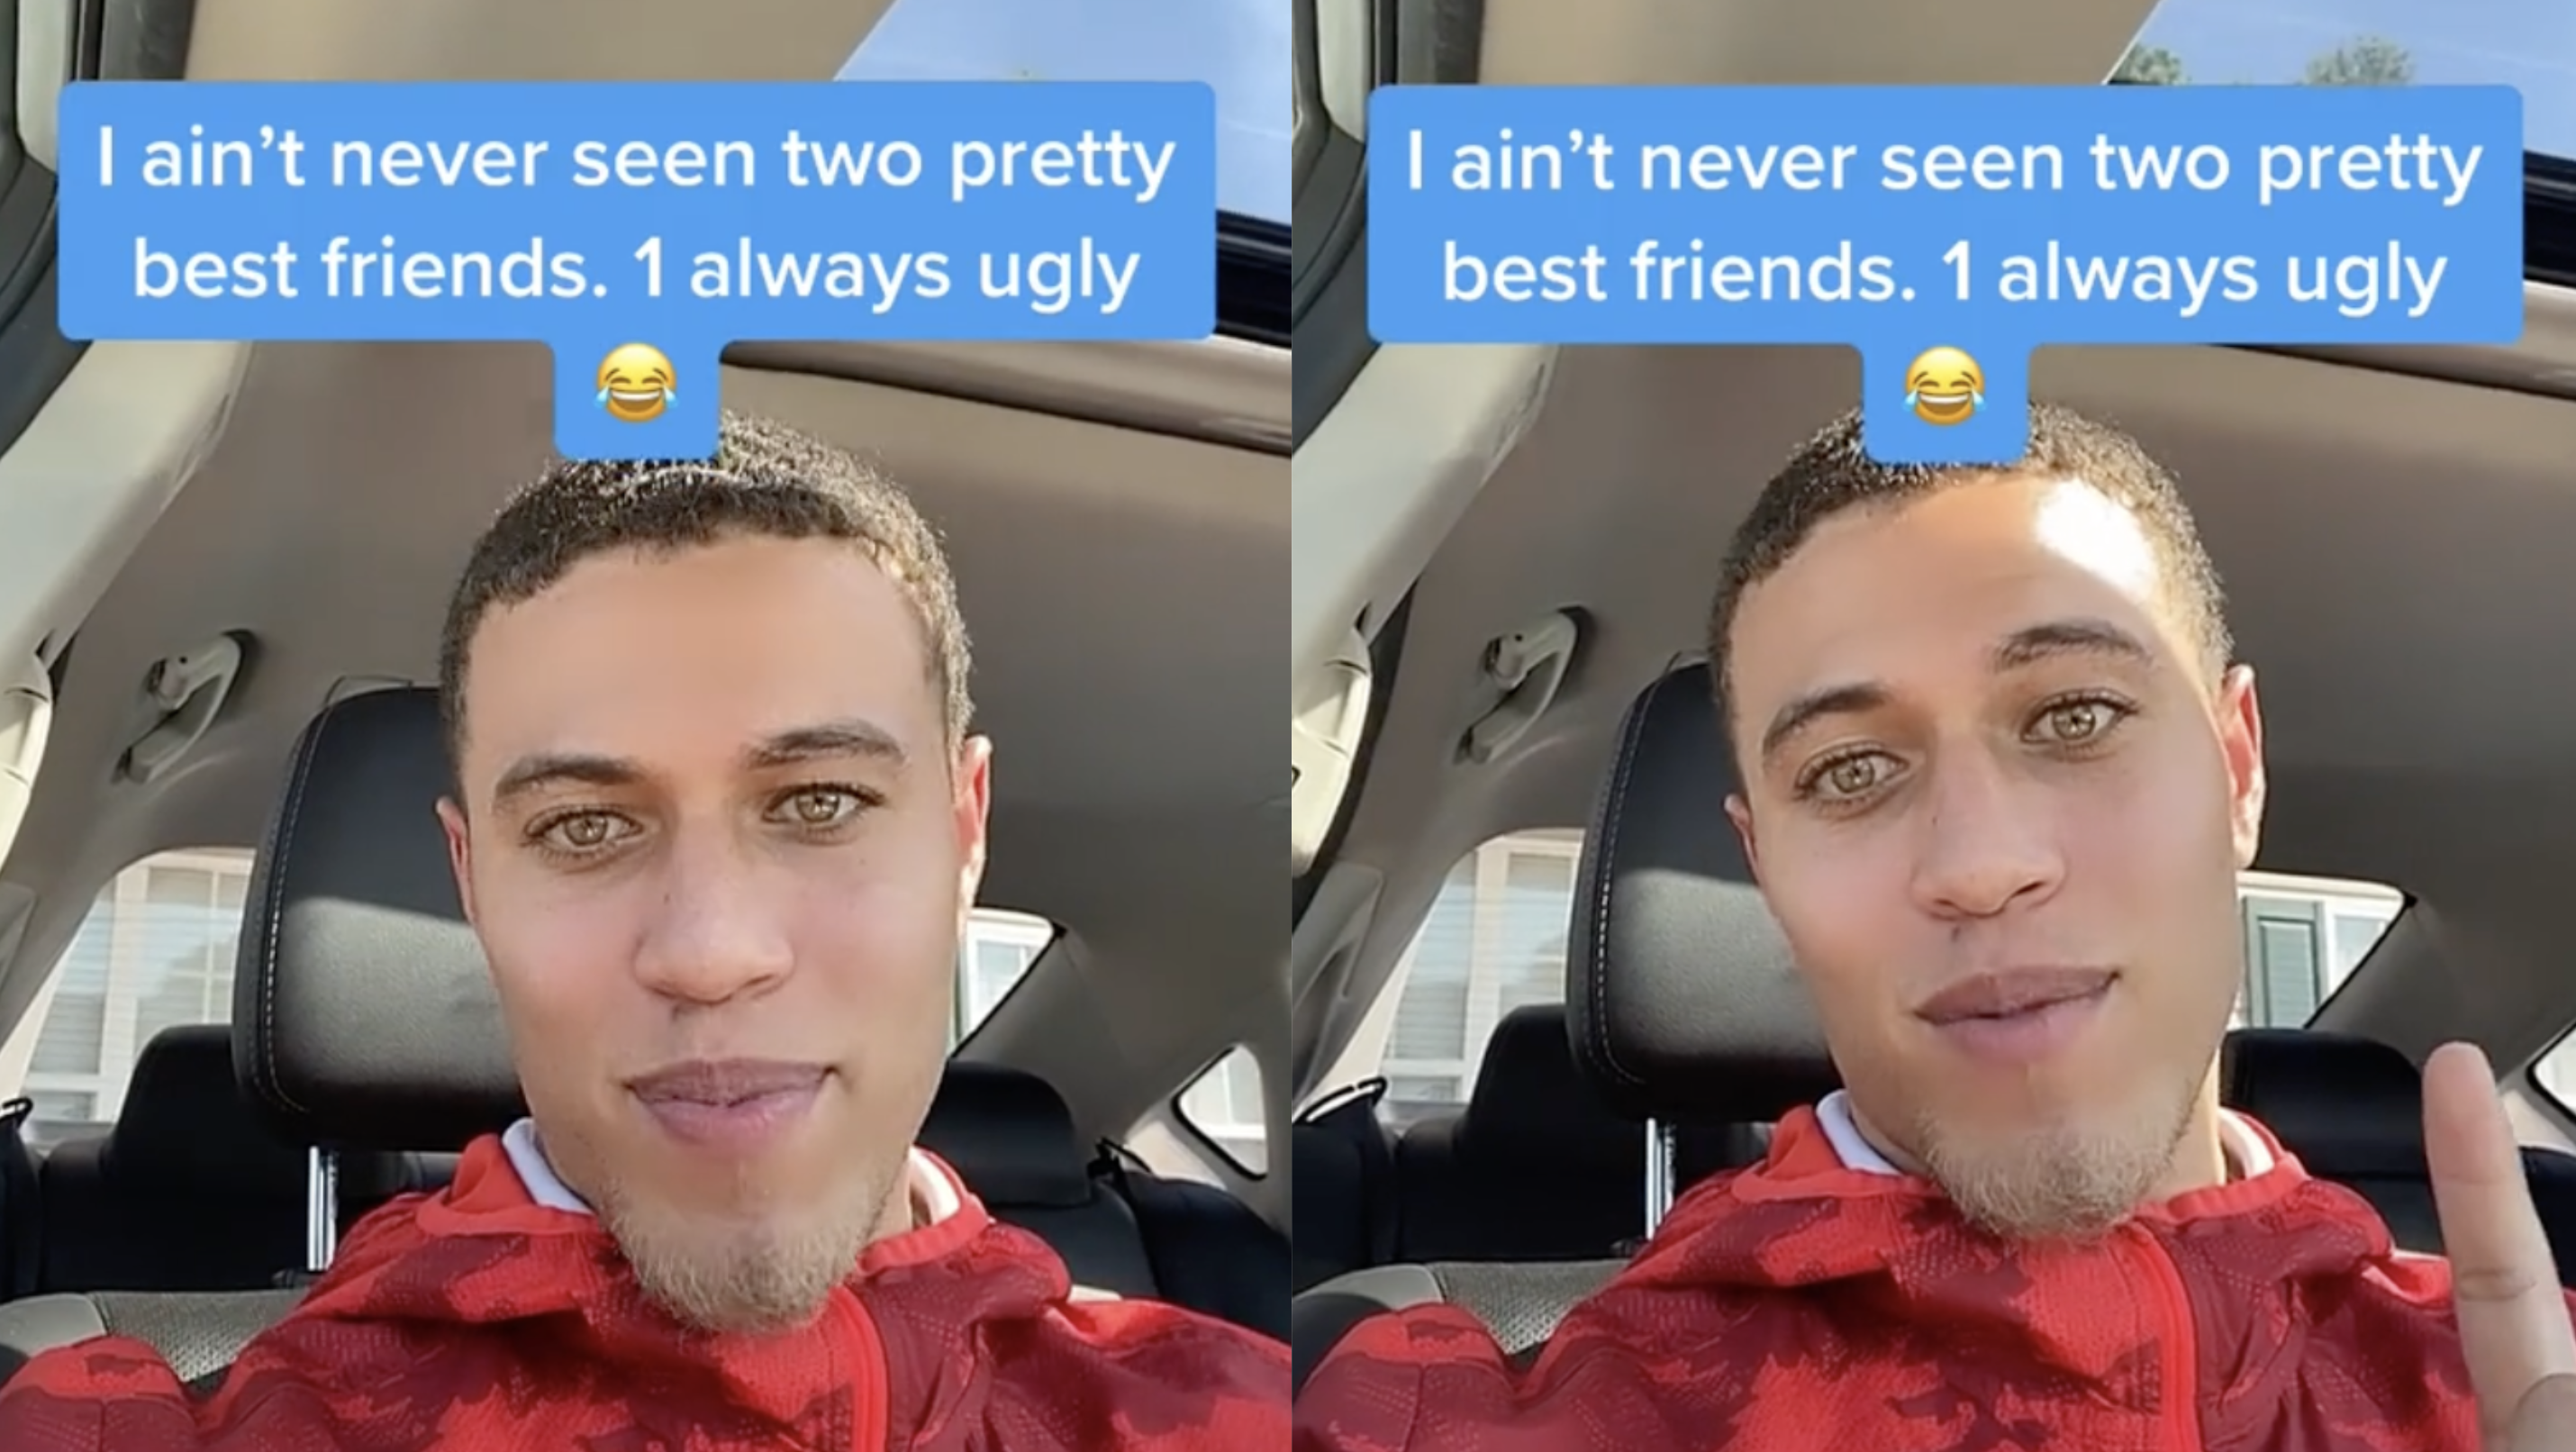 Jordan Scott's "I ain't never seen two pretty best friends" video